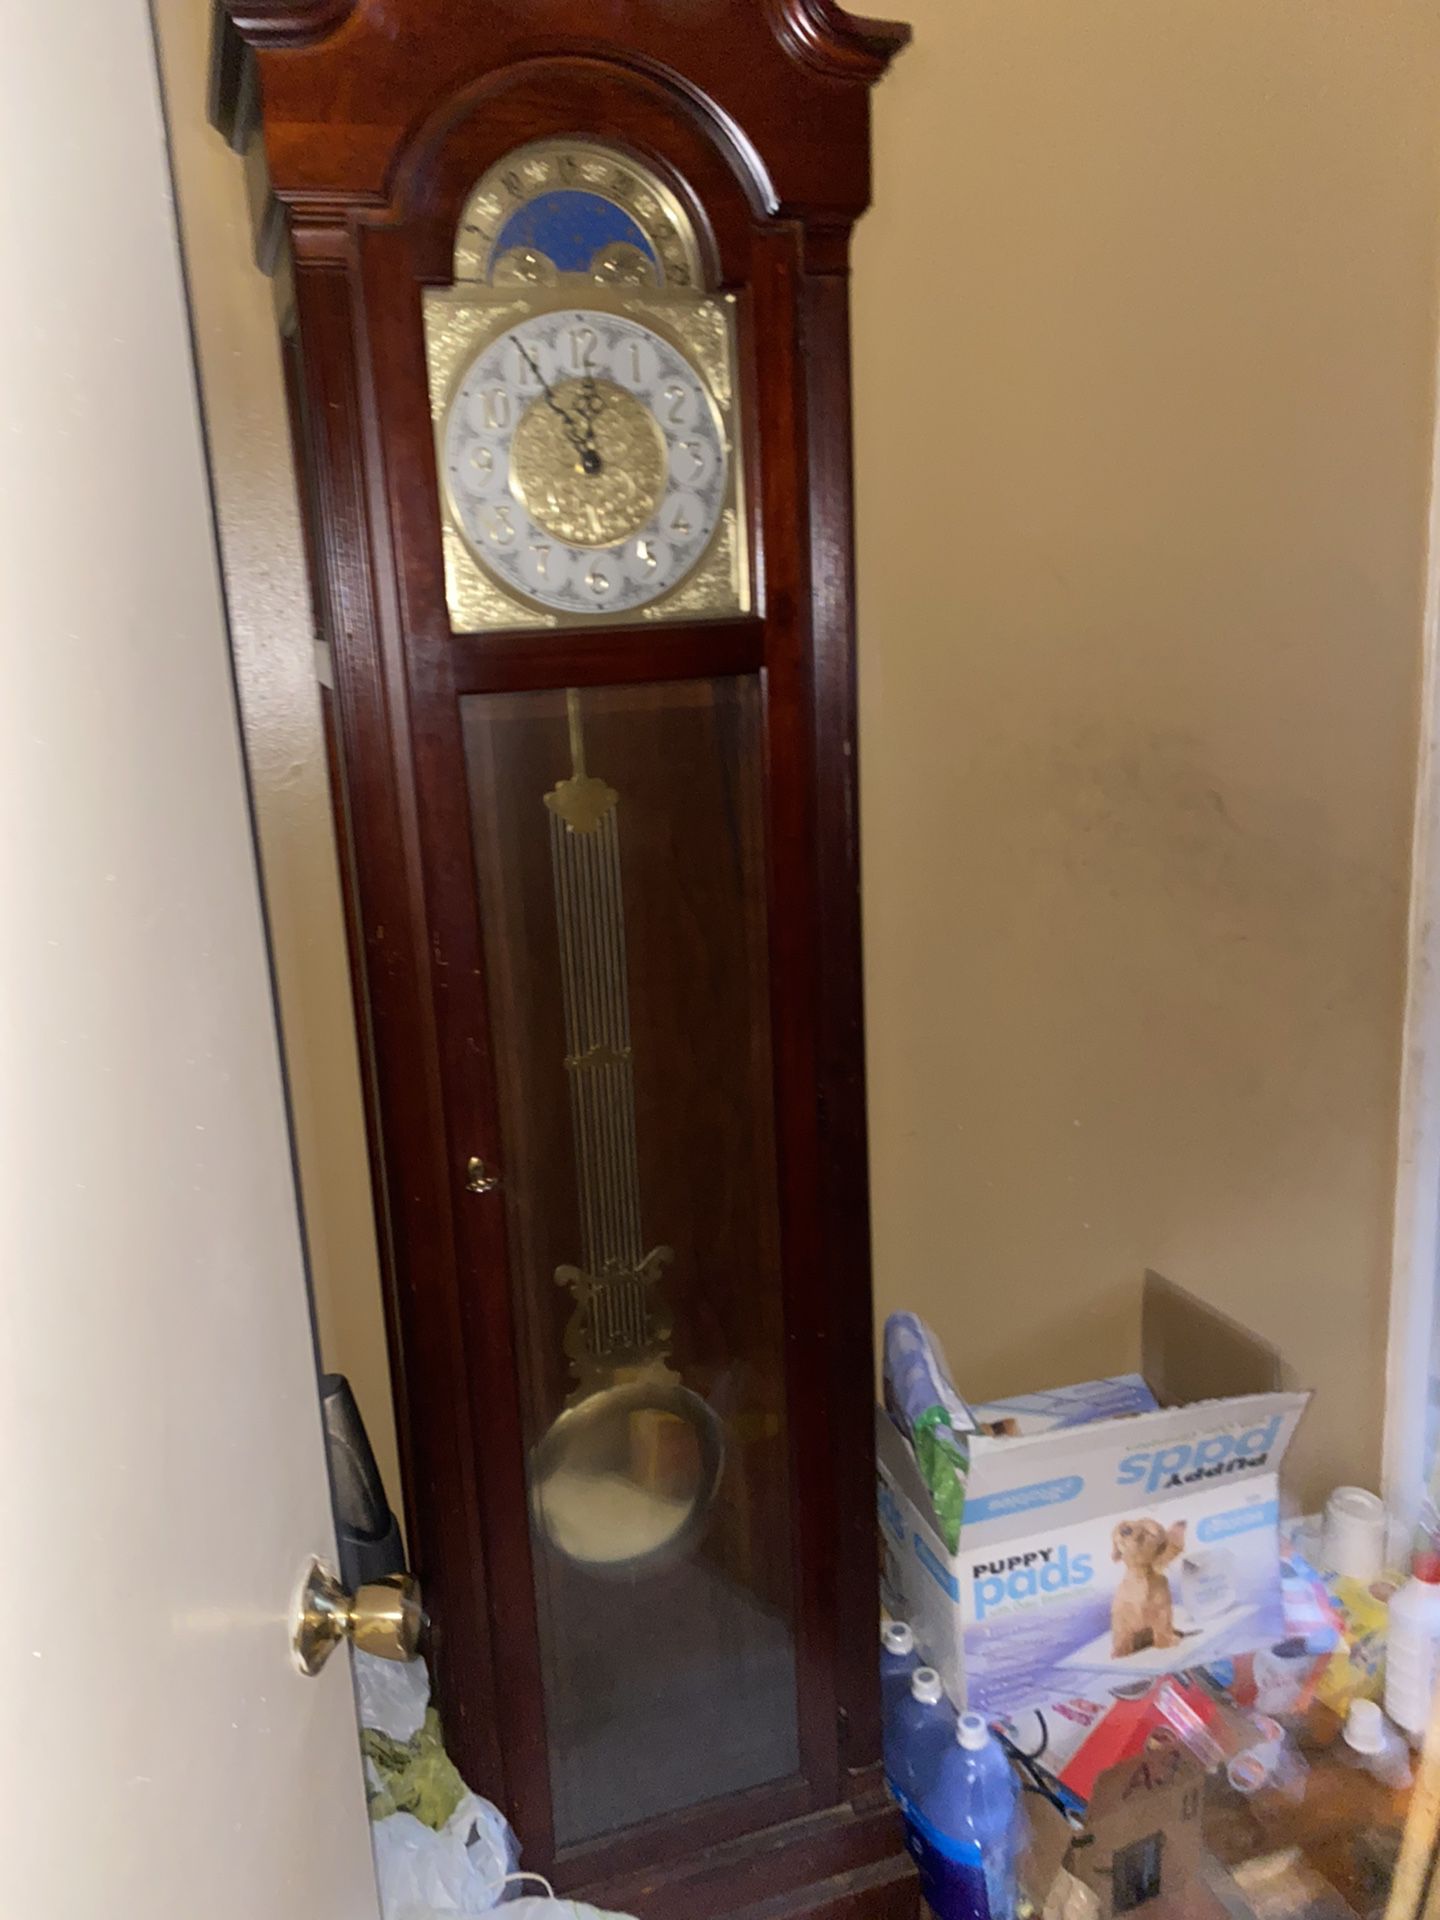 Ridgeway grandfather clock need chains put back on